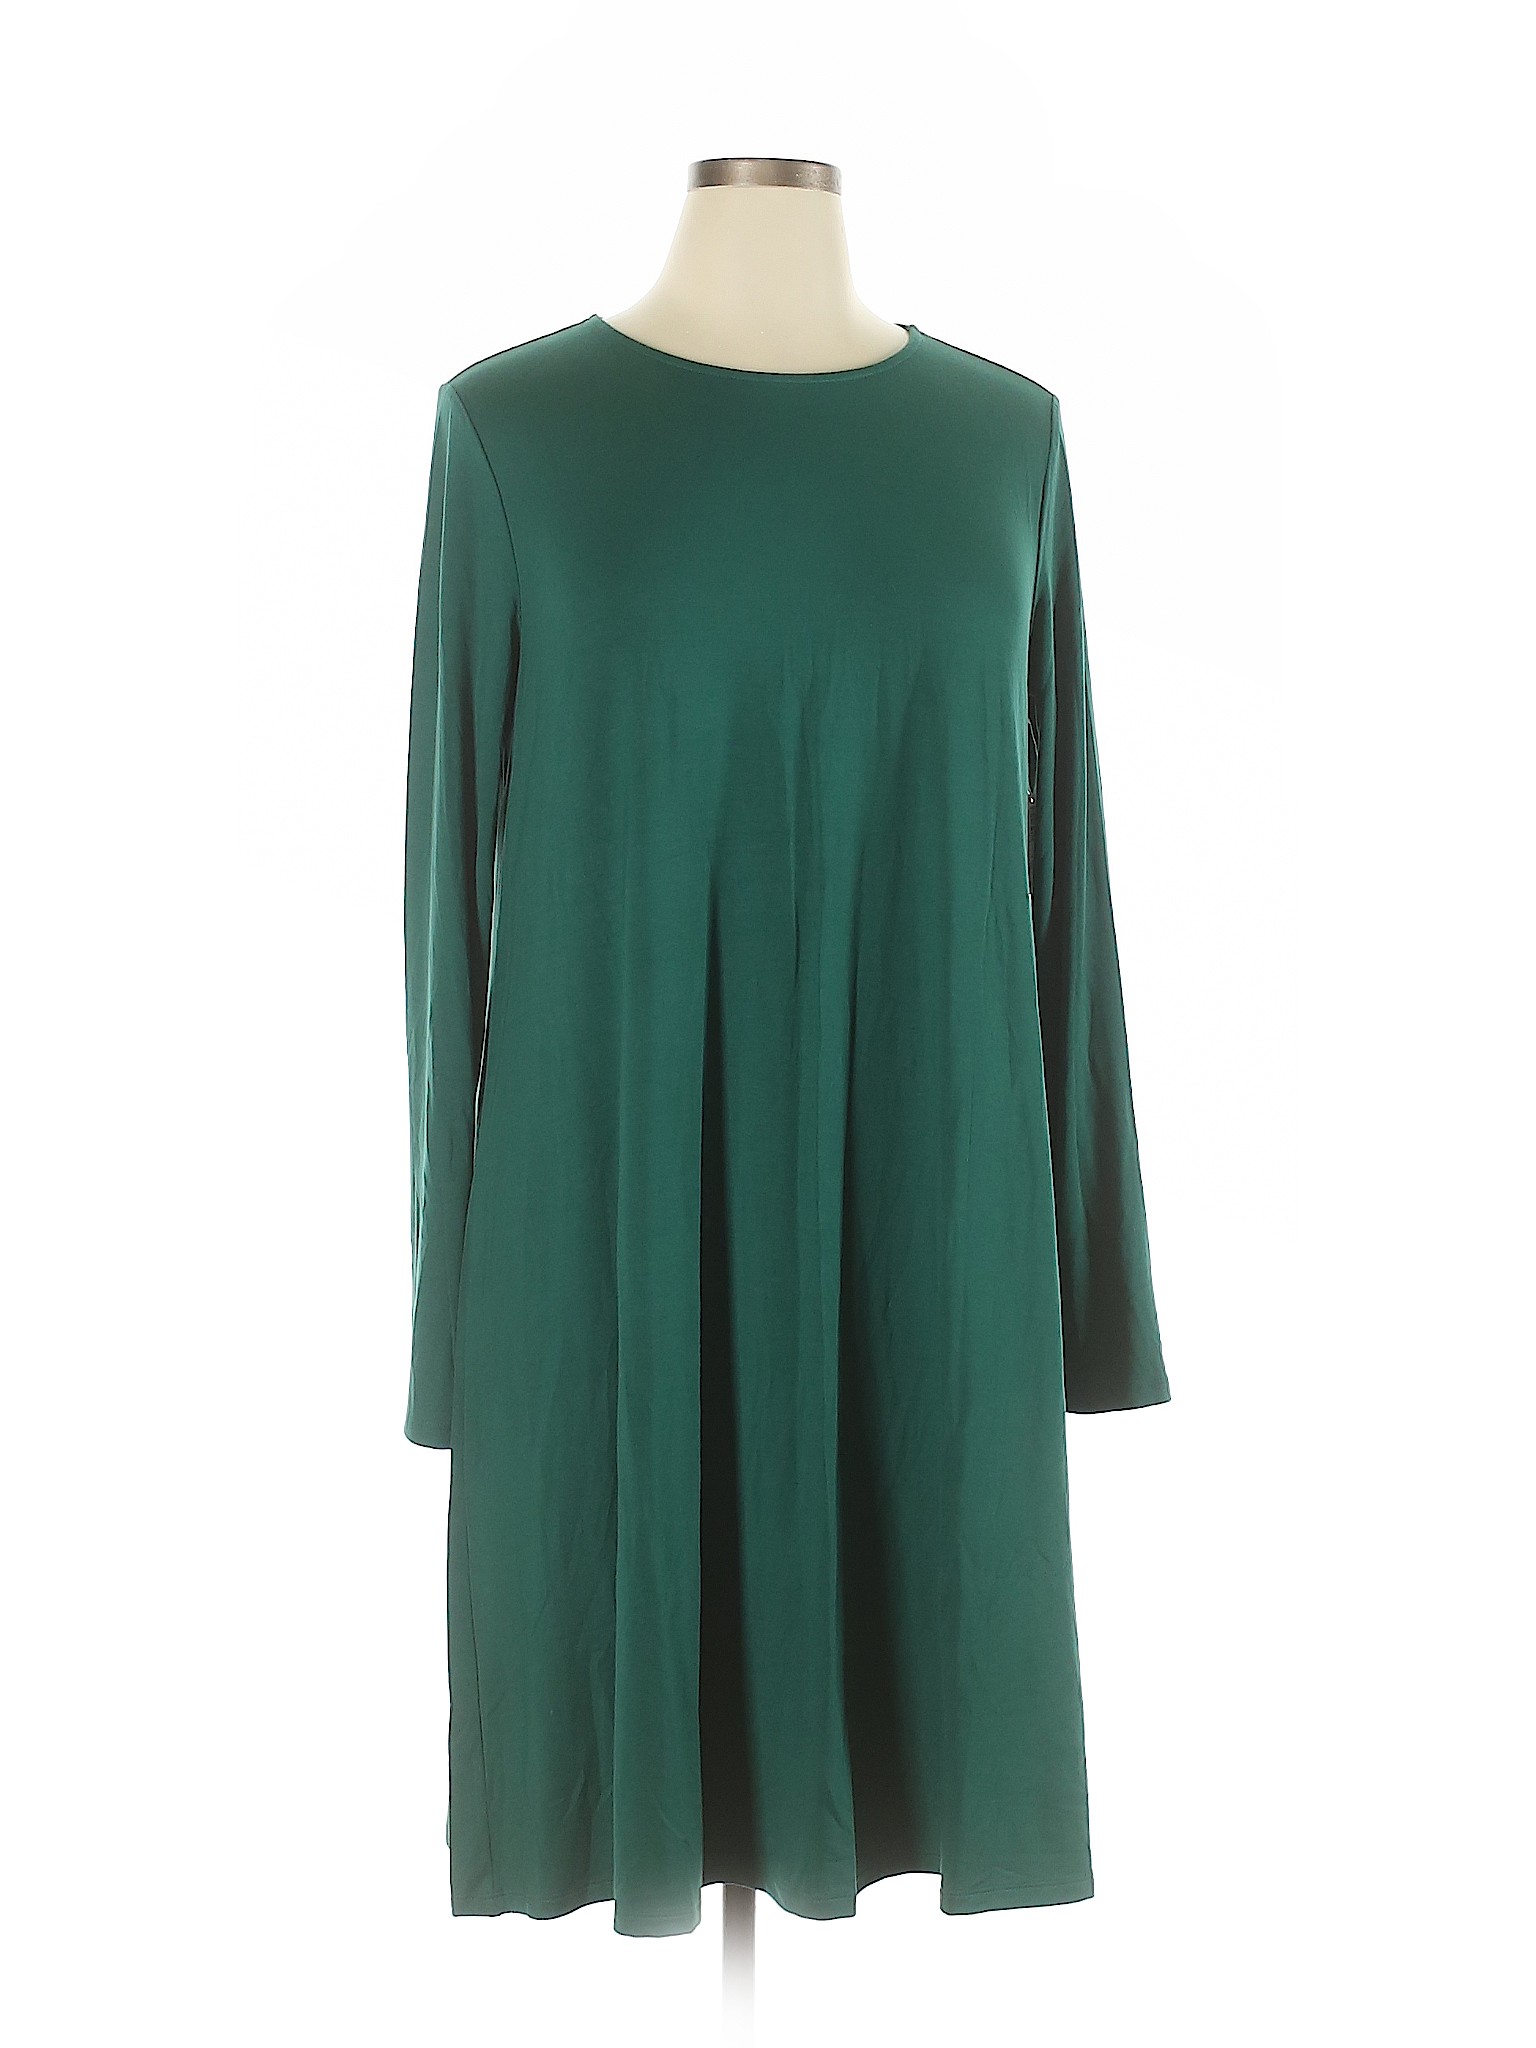 NWT Old Navy Women Green Casual Dress XL Tall | eBay